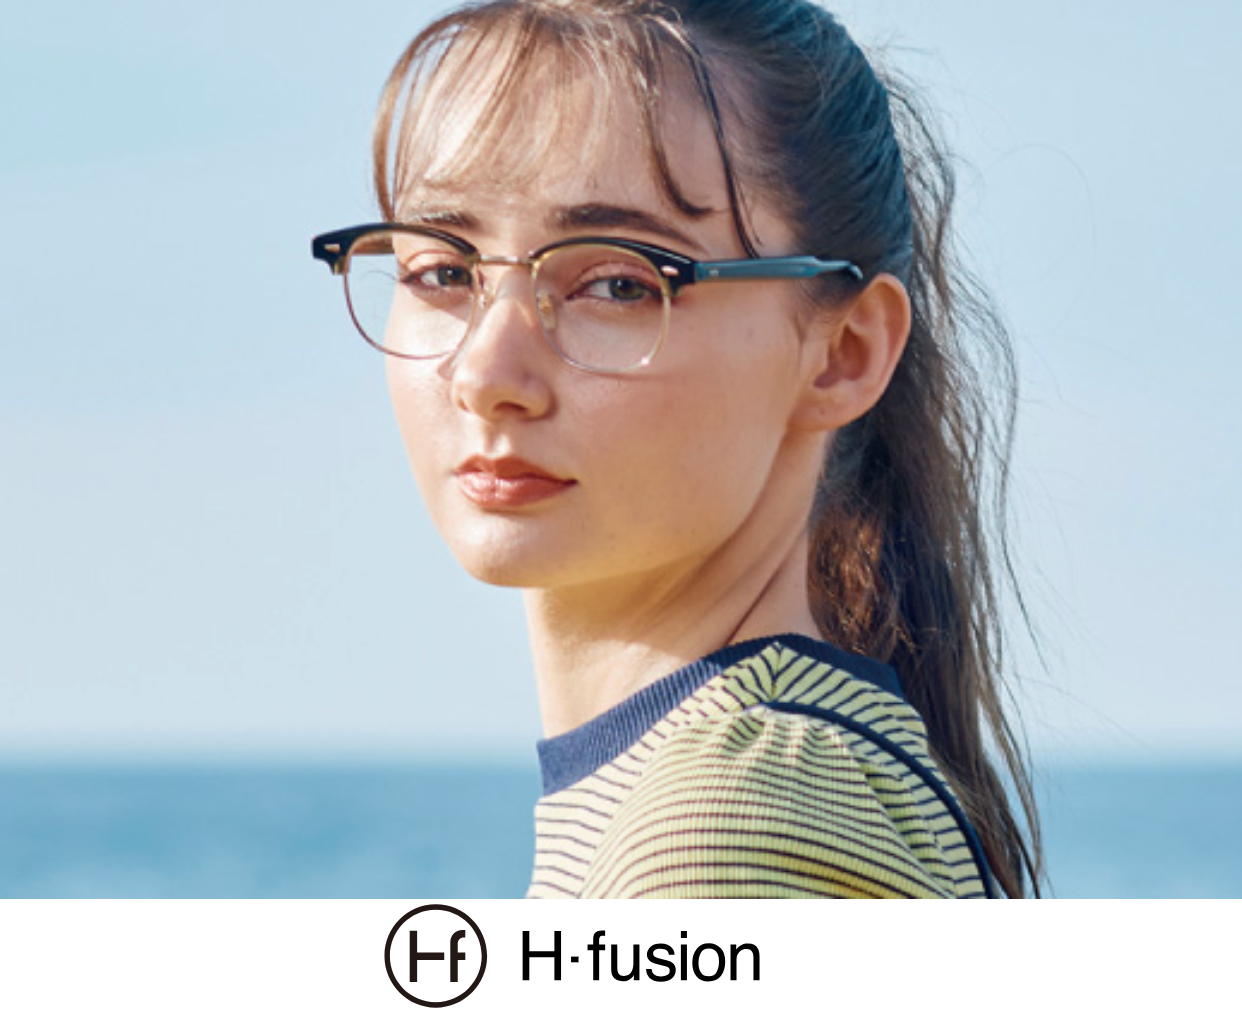 H-fusion